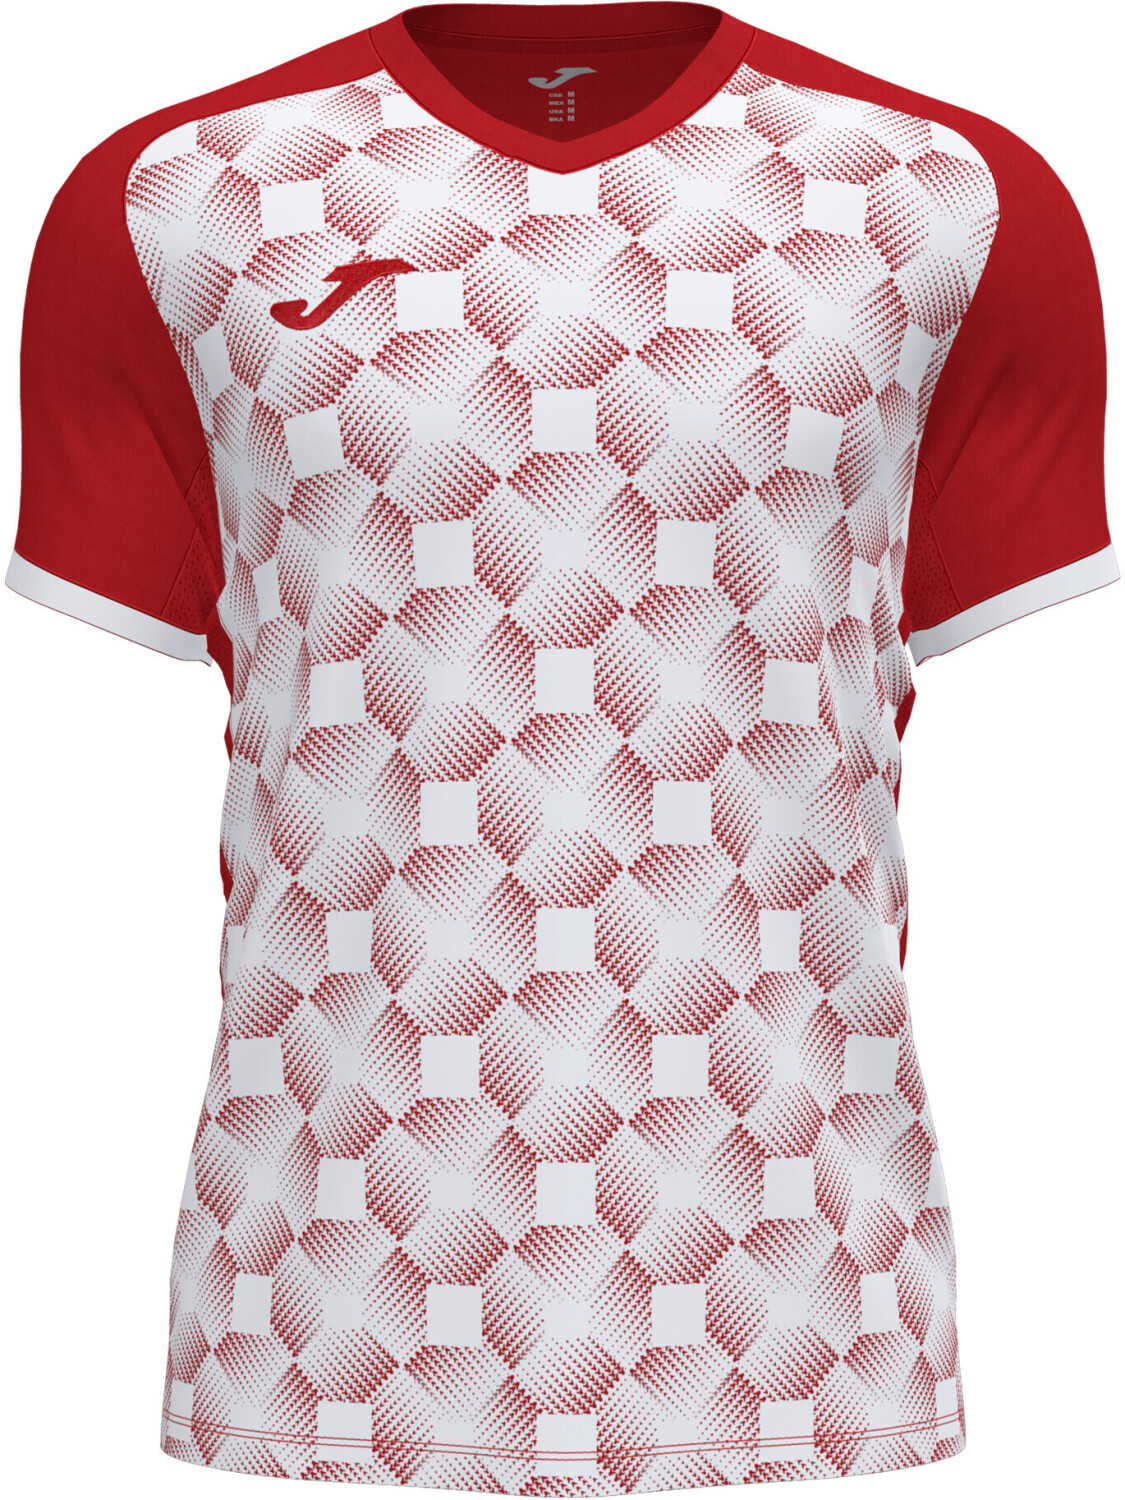 Photos - Football Kit Joma Supernova III Shirt  red/white (102263k)